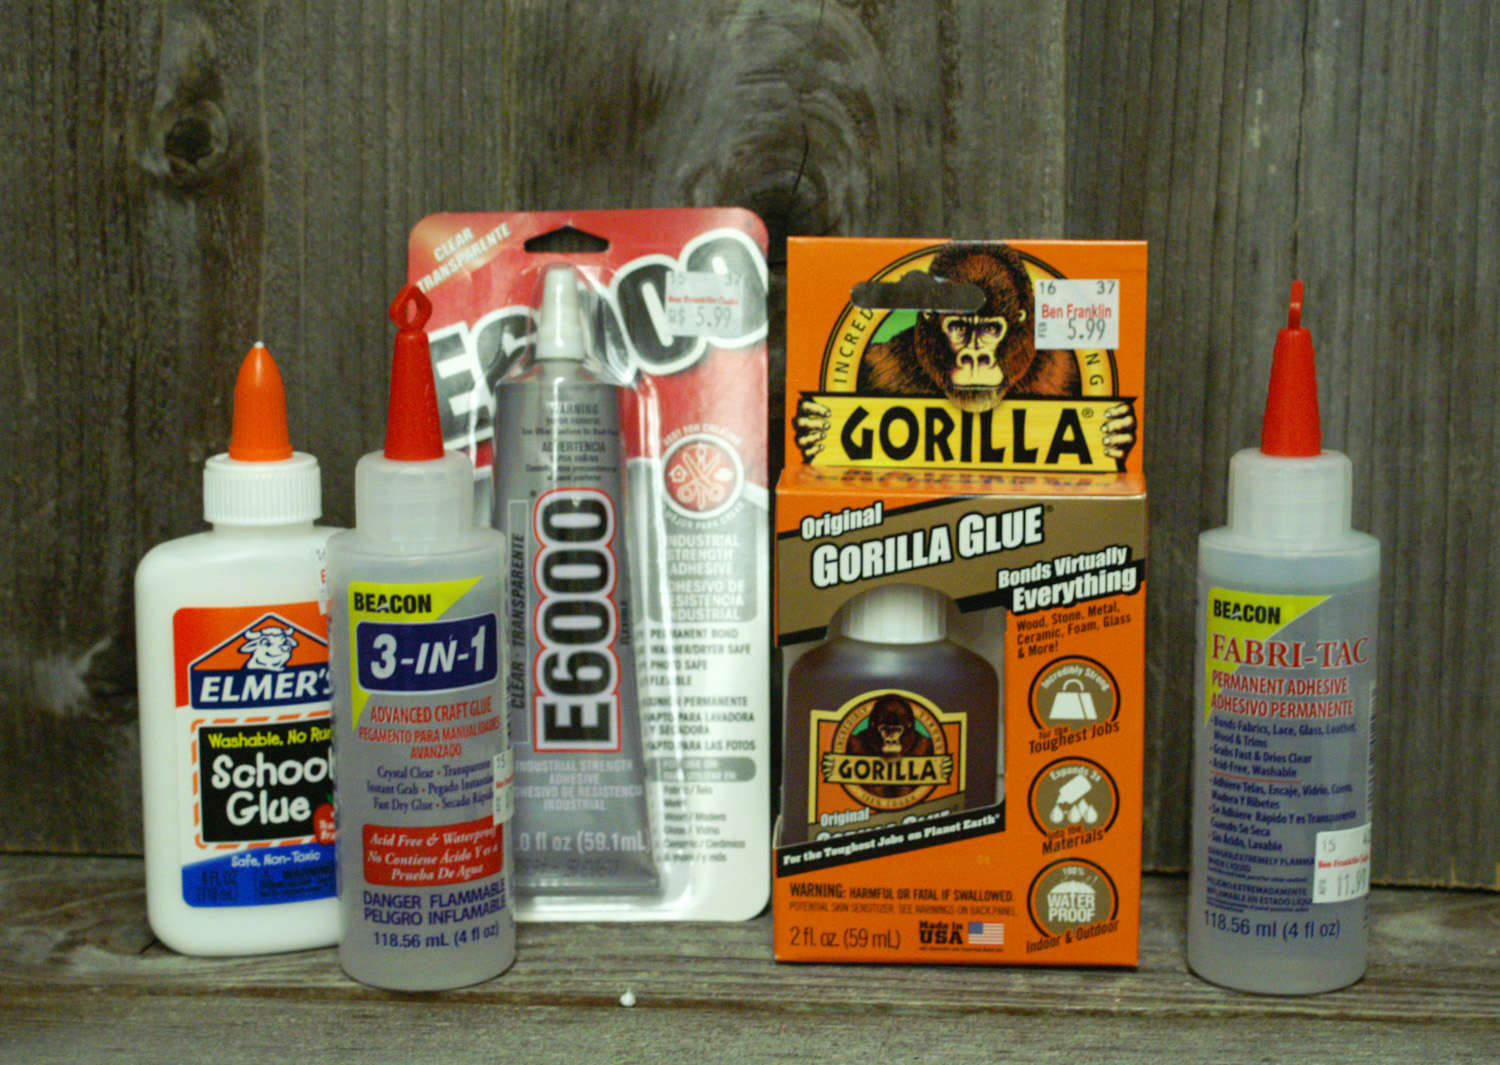 All-Craft Multi Glue - Low Odor Craft Glue That Dries Clear & Fast